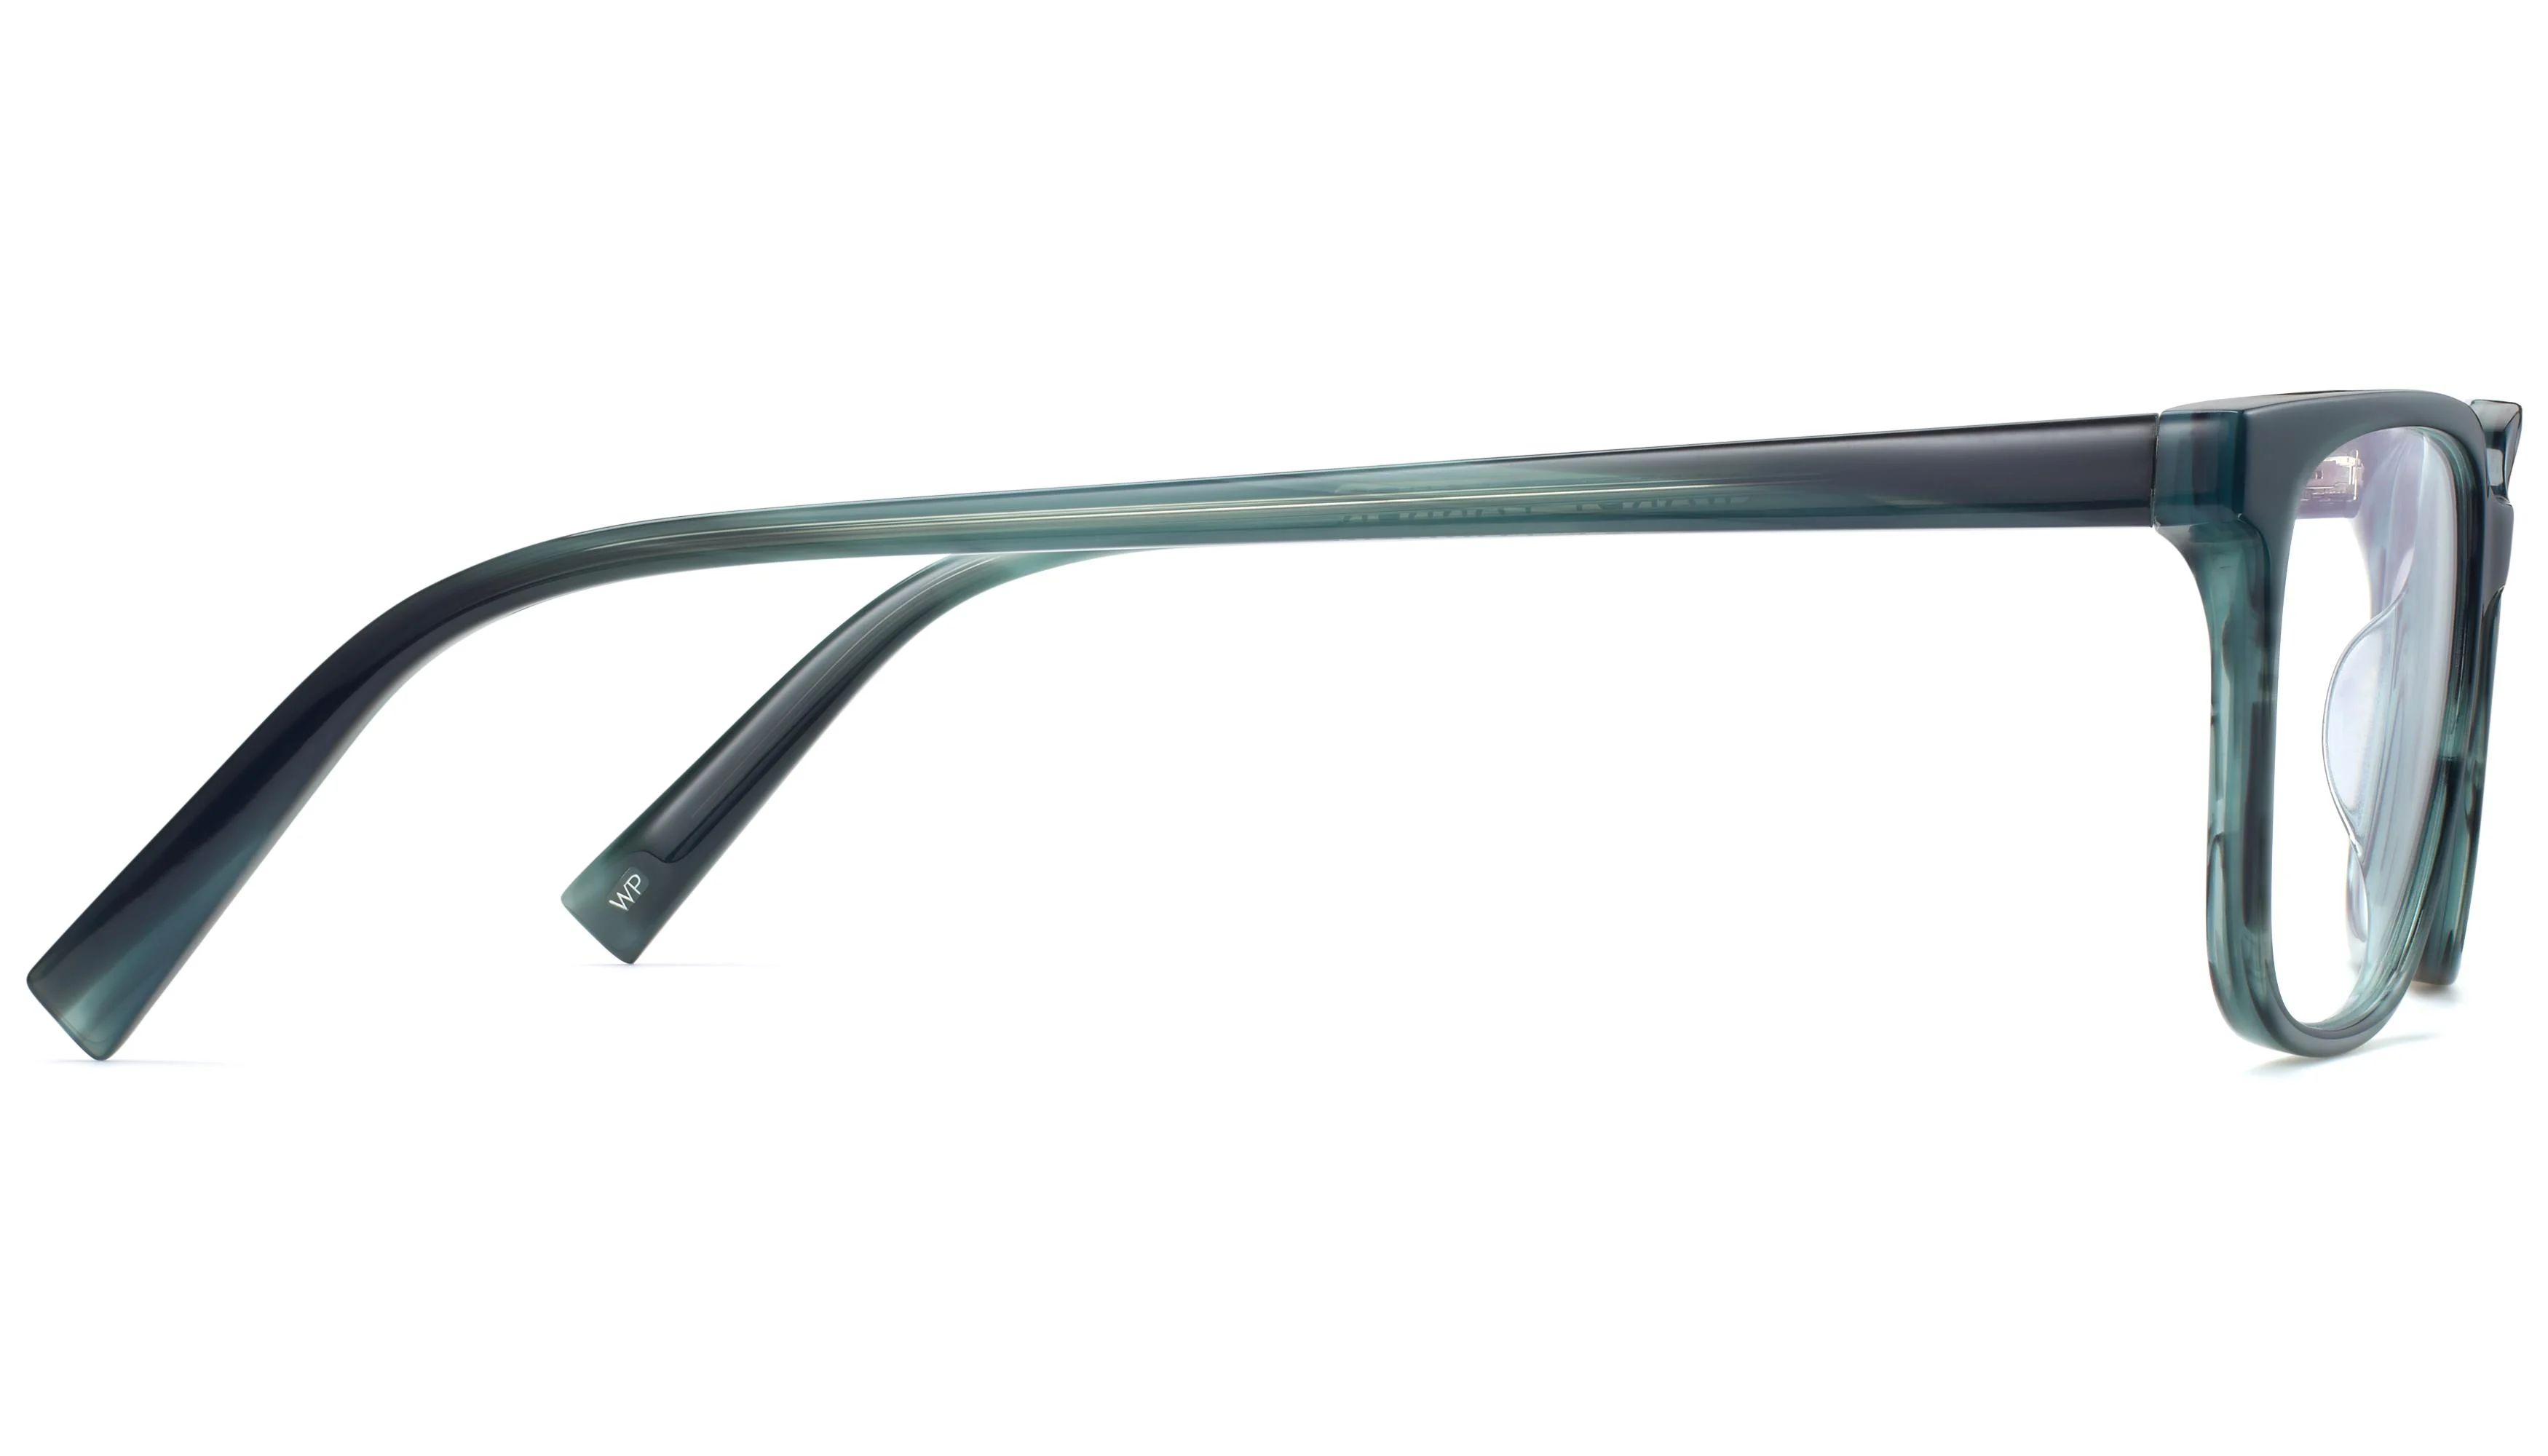 Hayden Low Bridge Fit Eyeglasses in Striped Pacific | Warby Parker | Warby Parker (US)